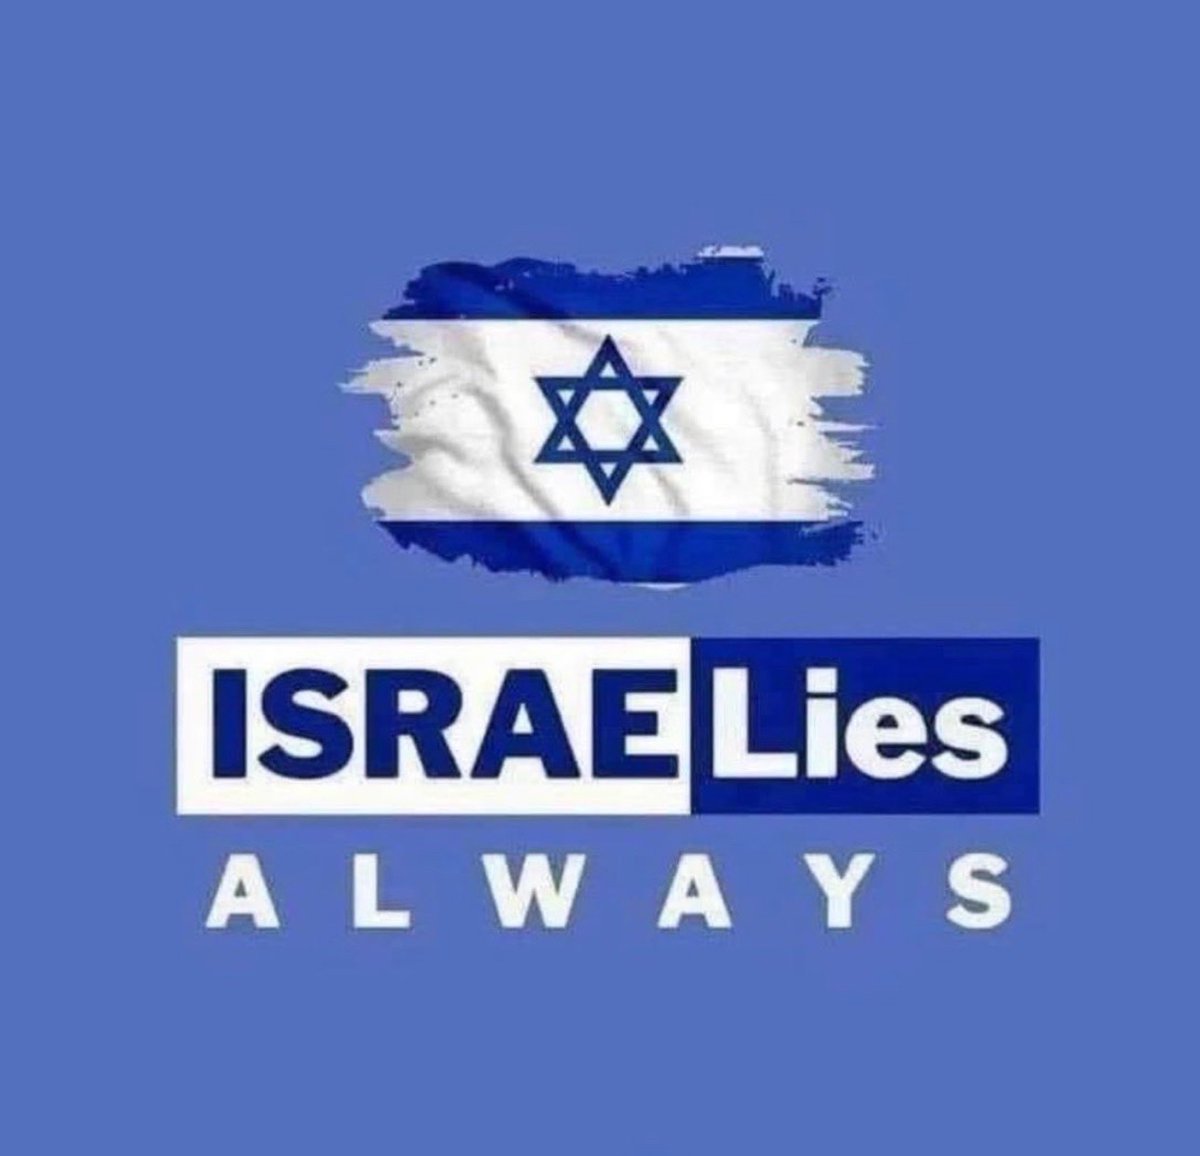 Israel Lies Always.
#Gaza_Solidarity_Night
#Gaza_Genocide